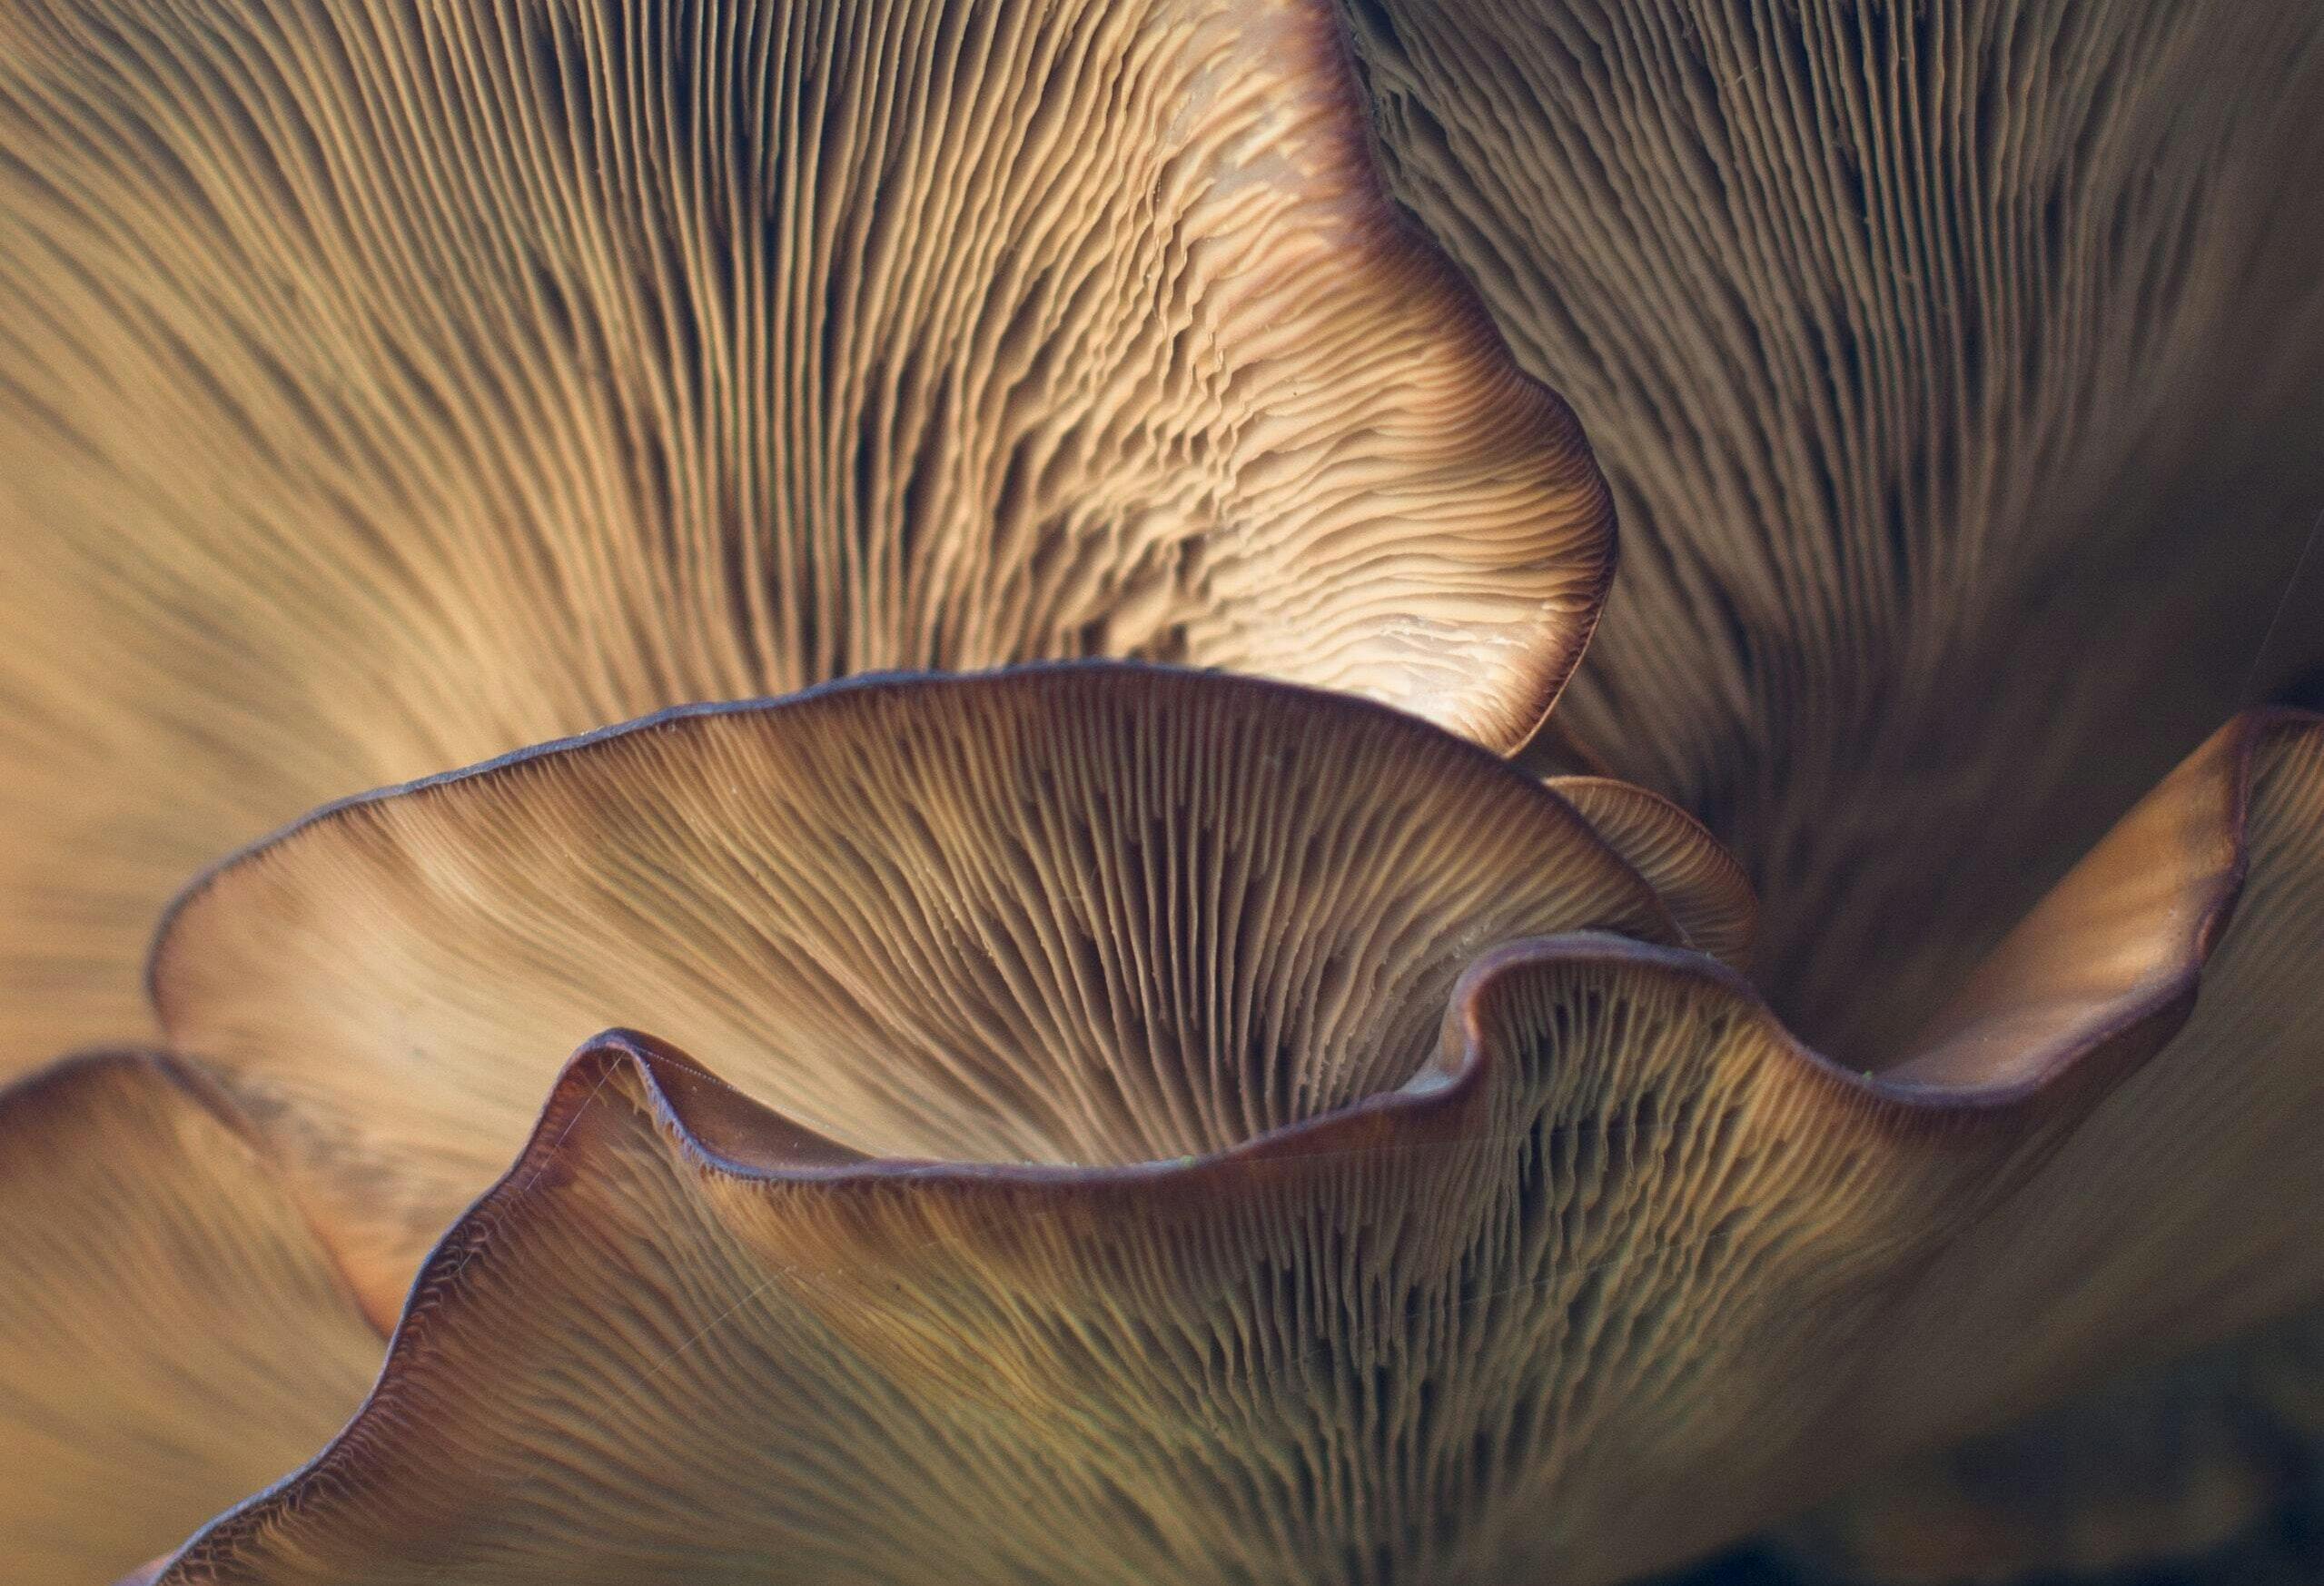 Abstract close-up of mushrooms